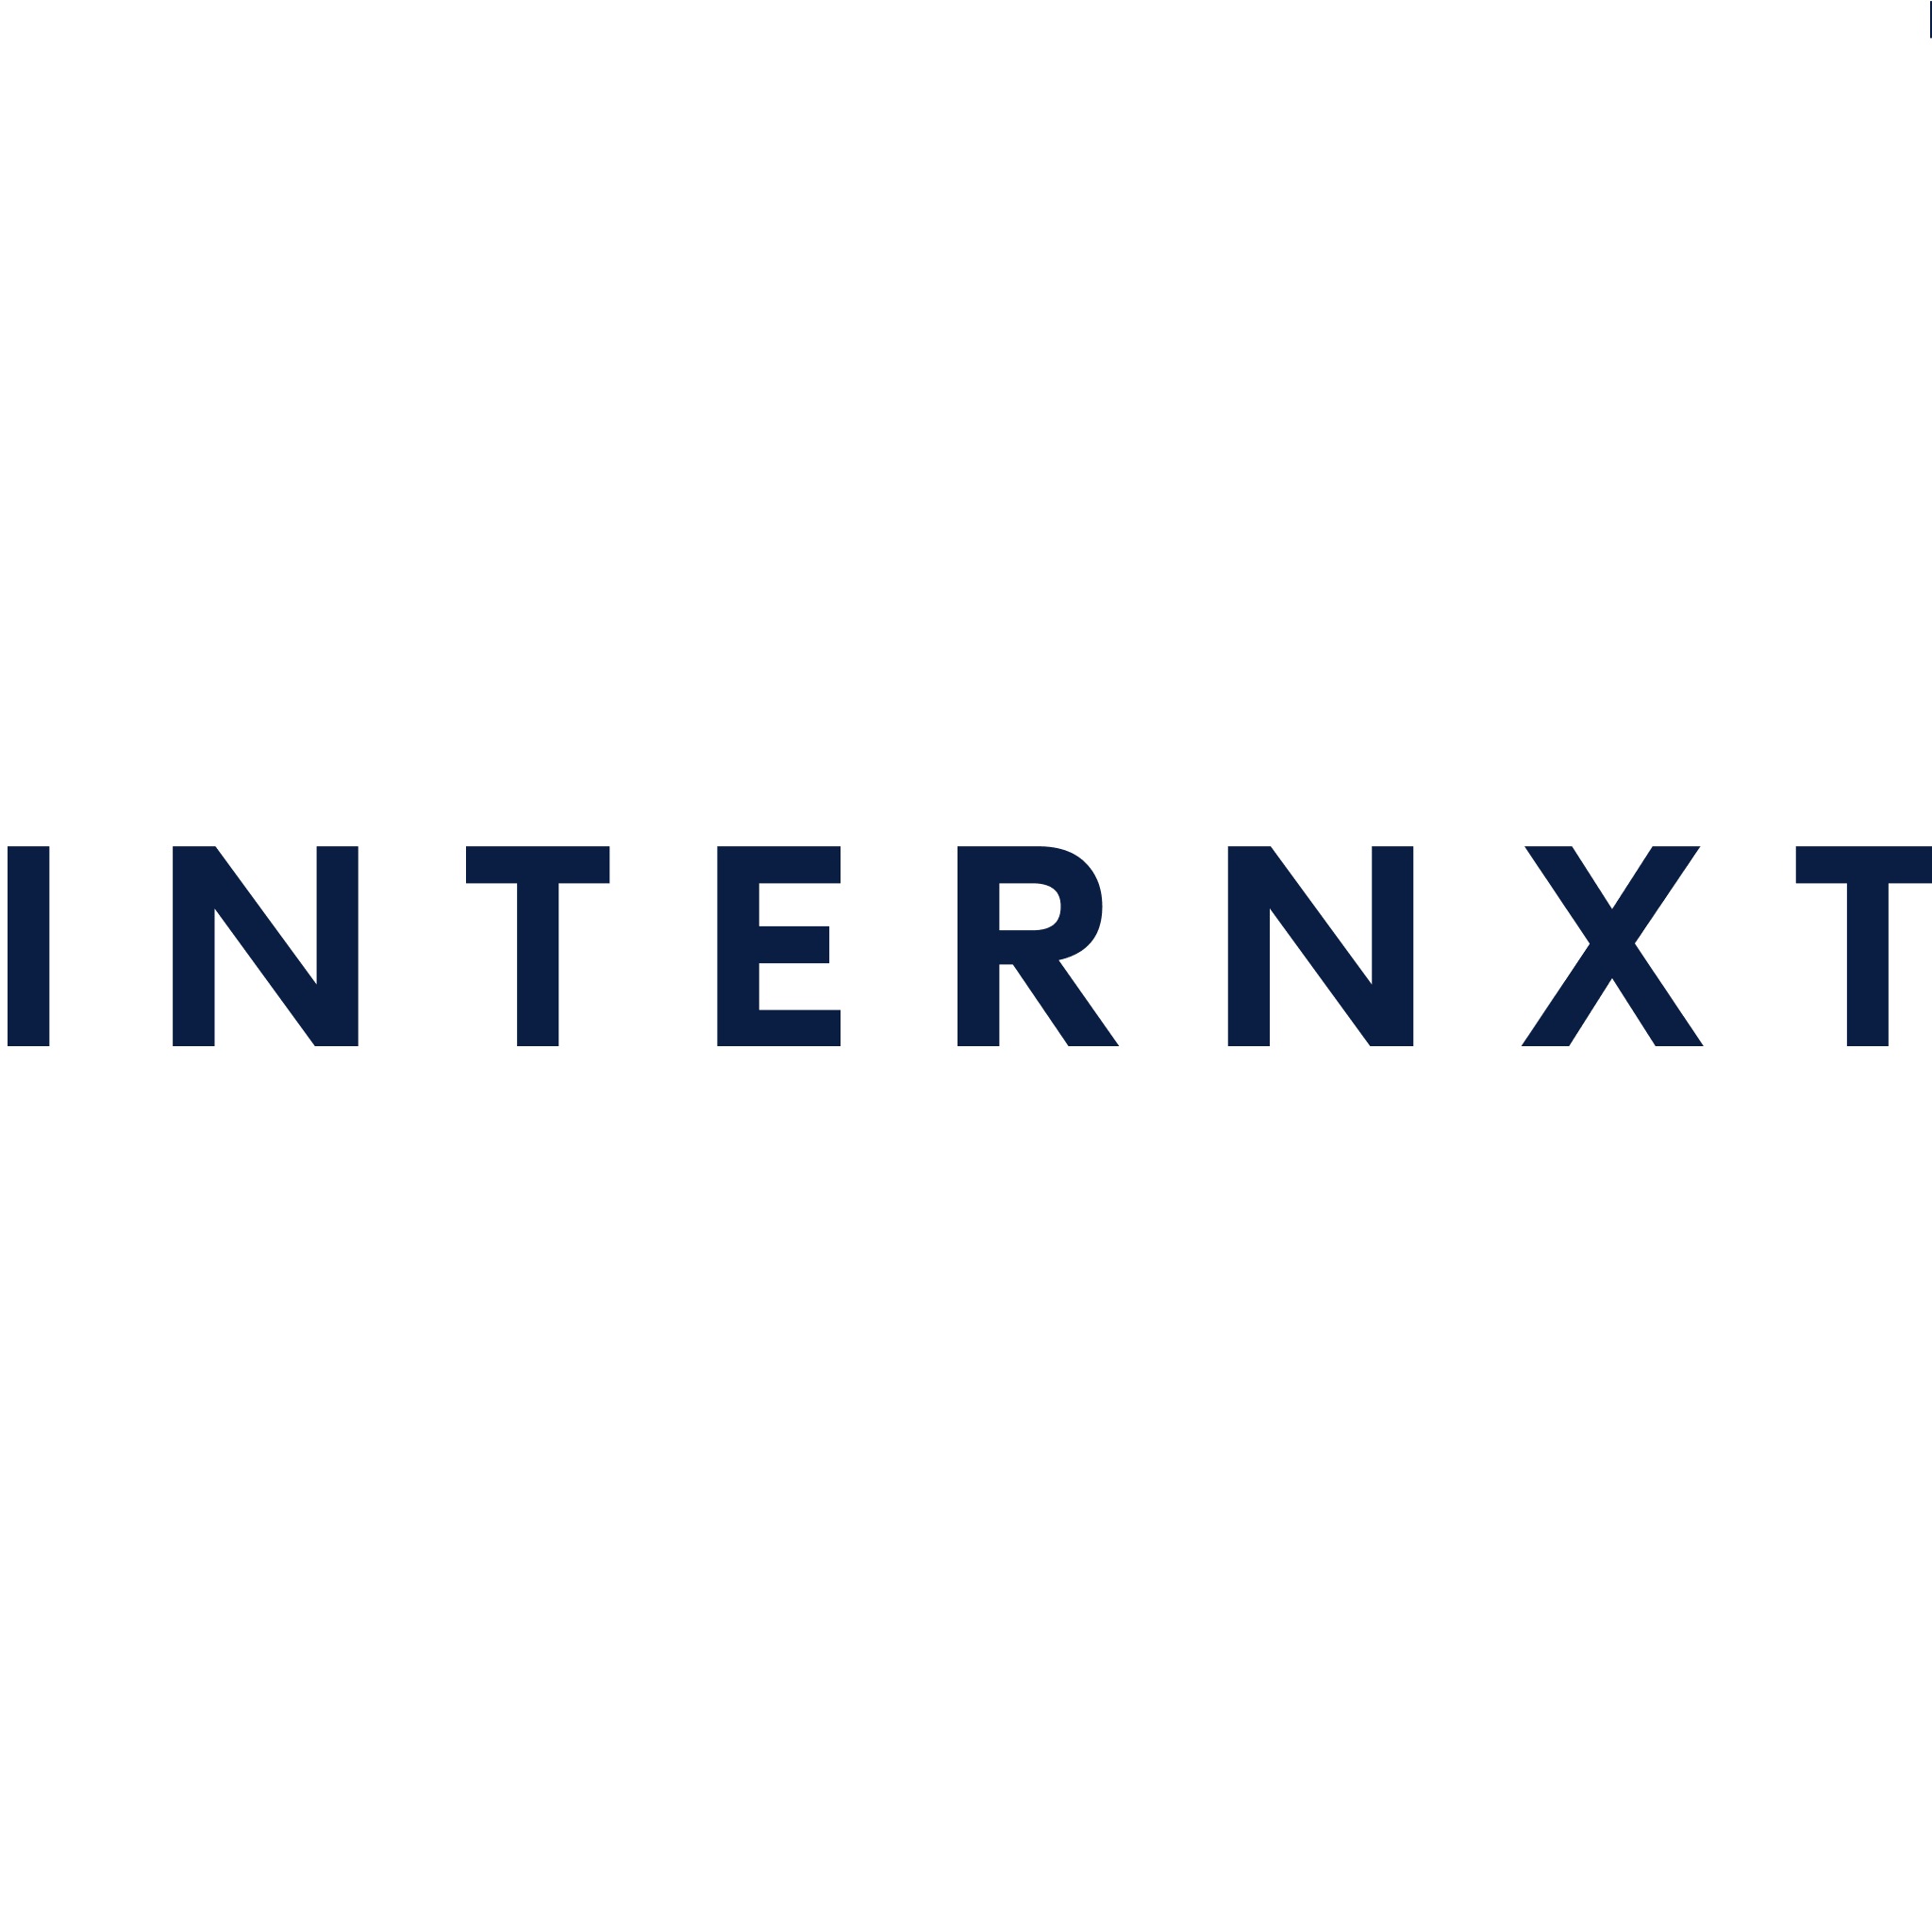 Internxt - Logo